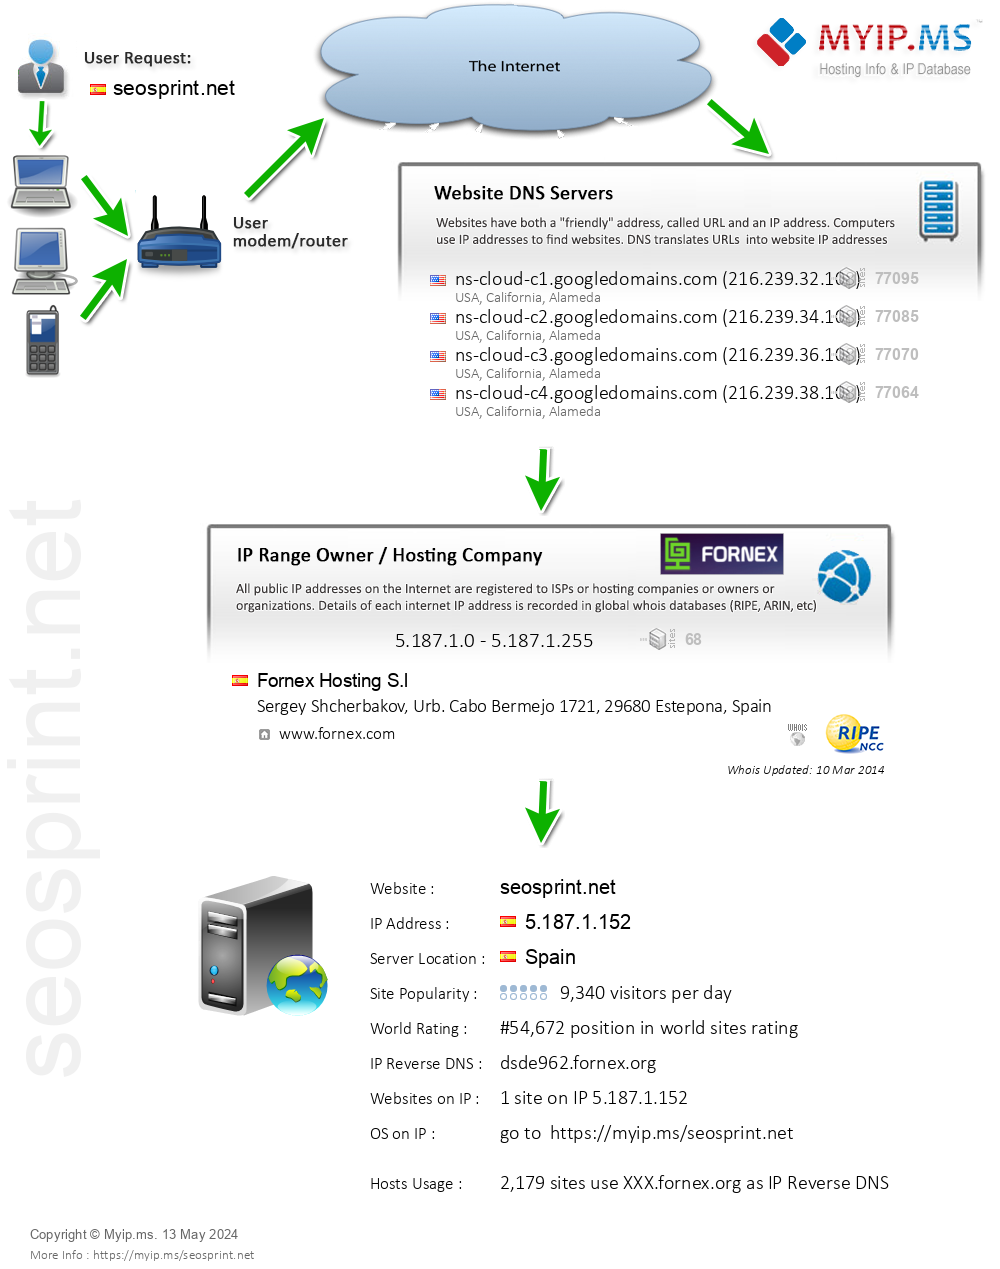 Seosprint.net - Website Hosting Visual IP Diagram